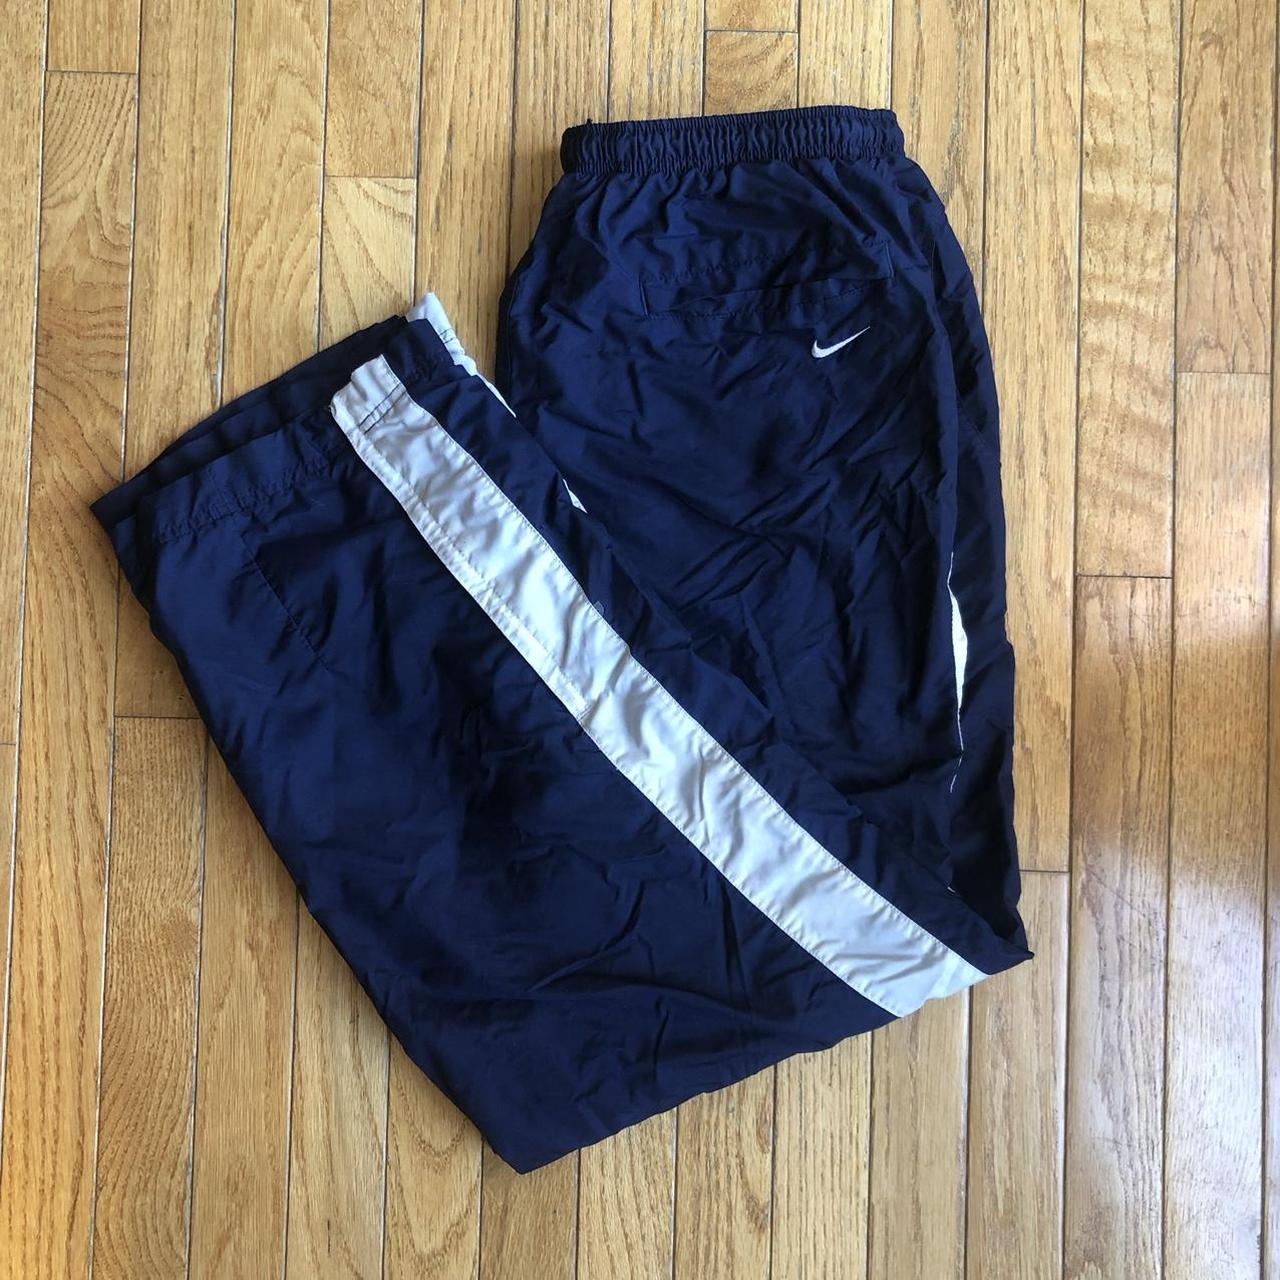 Vintage Navy Nike Trackpants Size L Fast 1-2 day... - Depop